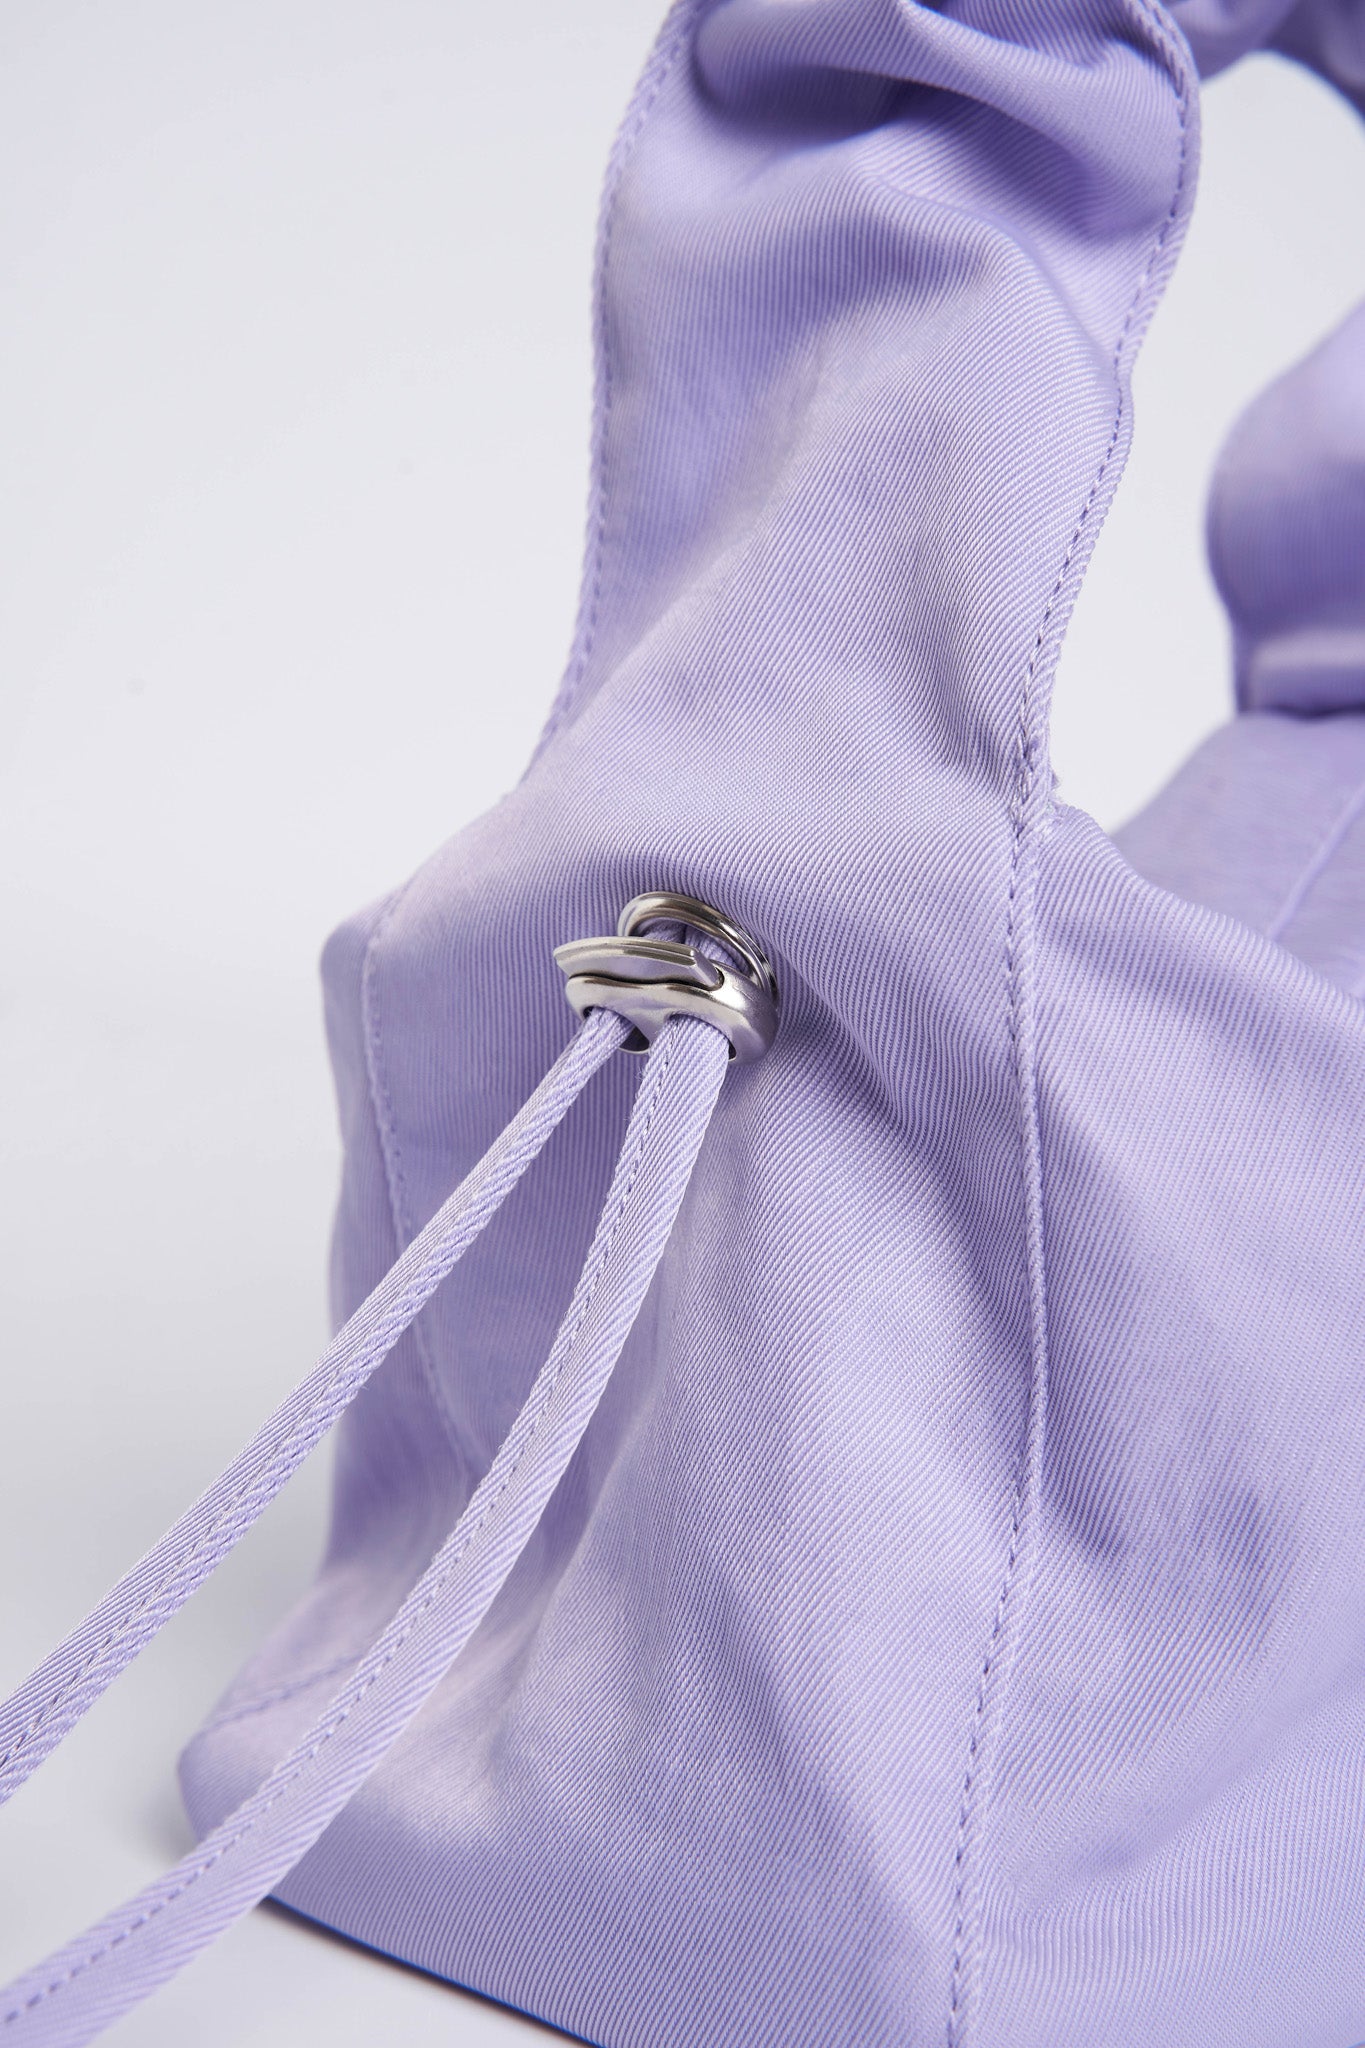 Scrunch Bag in Lavender